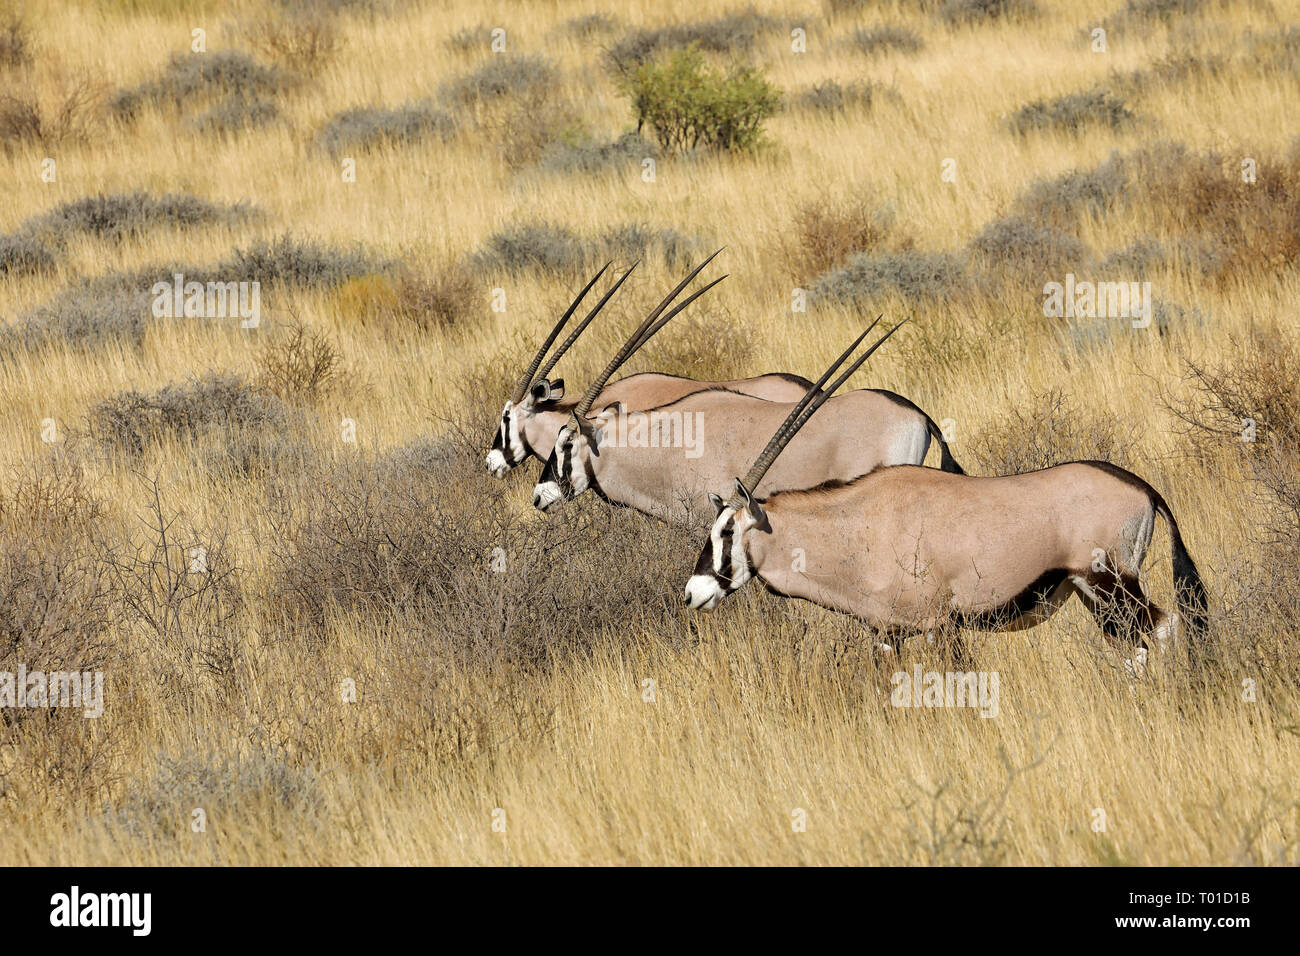 Les antilopes gemsbok (Oryx gazella) dans l'habitat naturel, désert du Kalahari, Afrique du Sud Banque D'Images